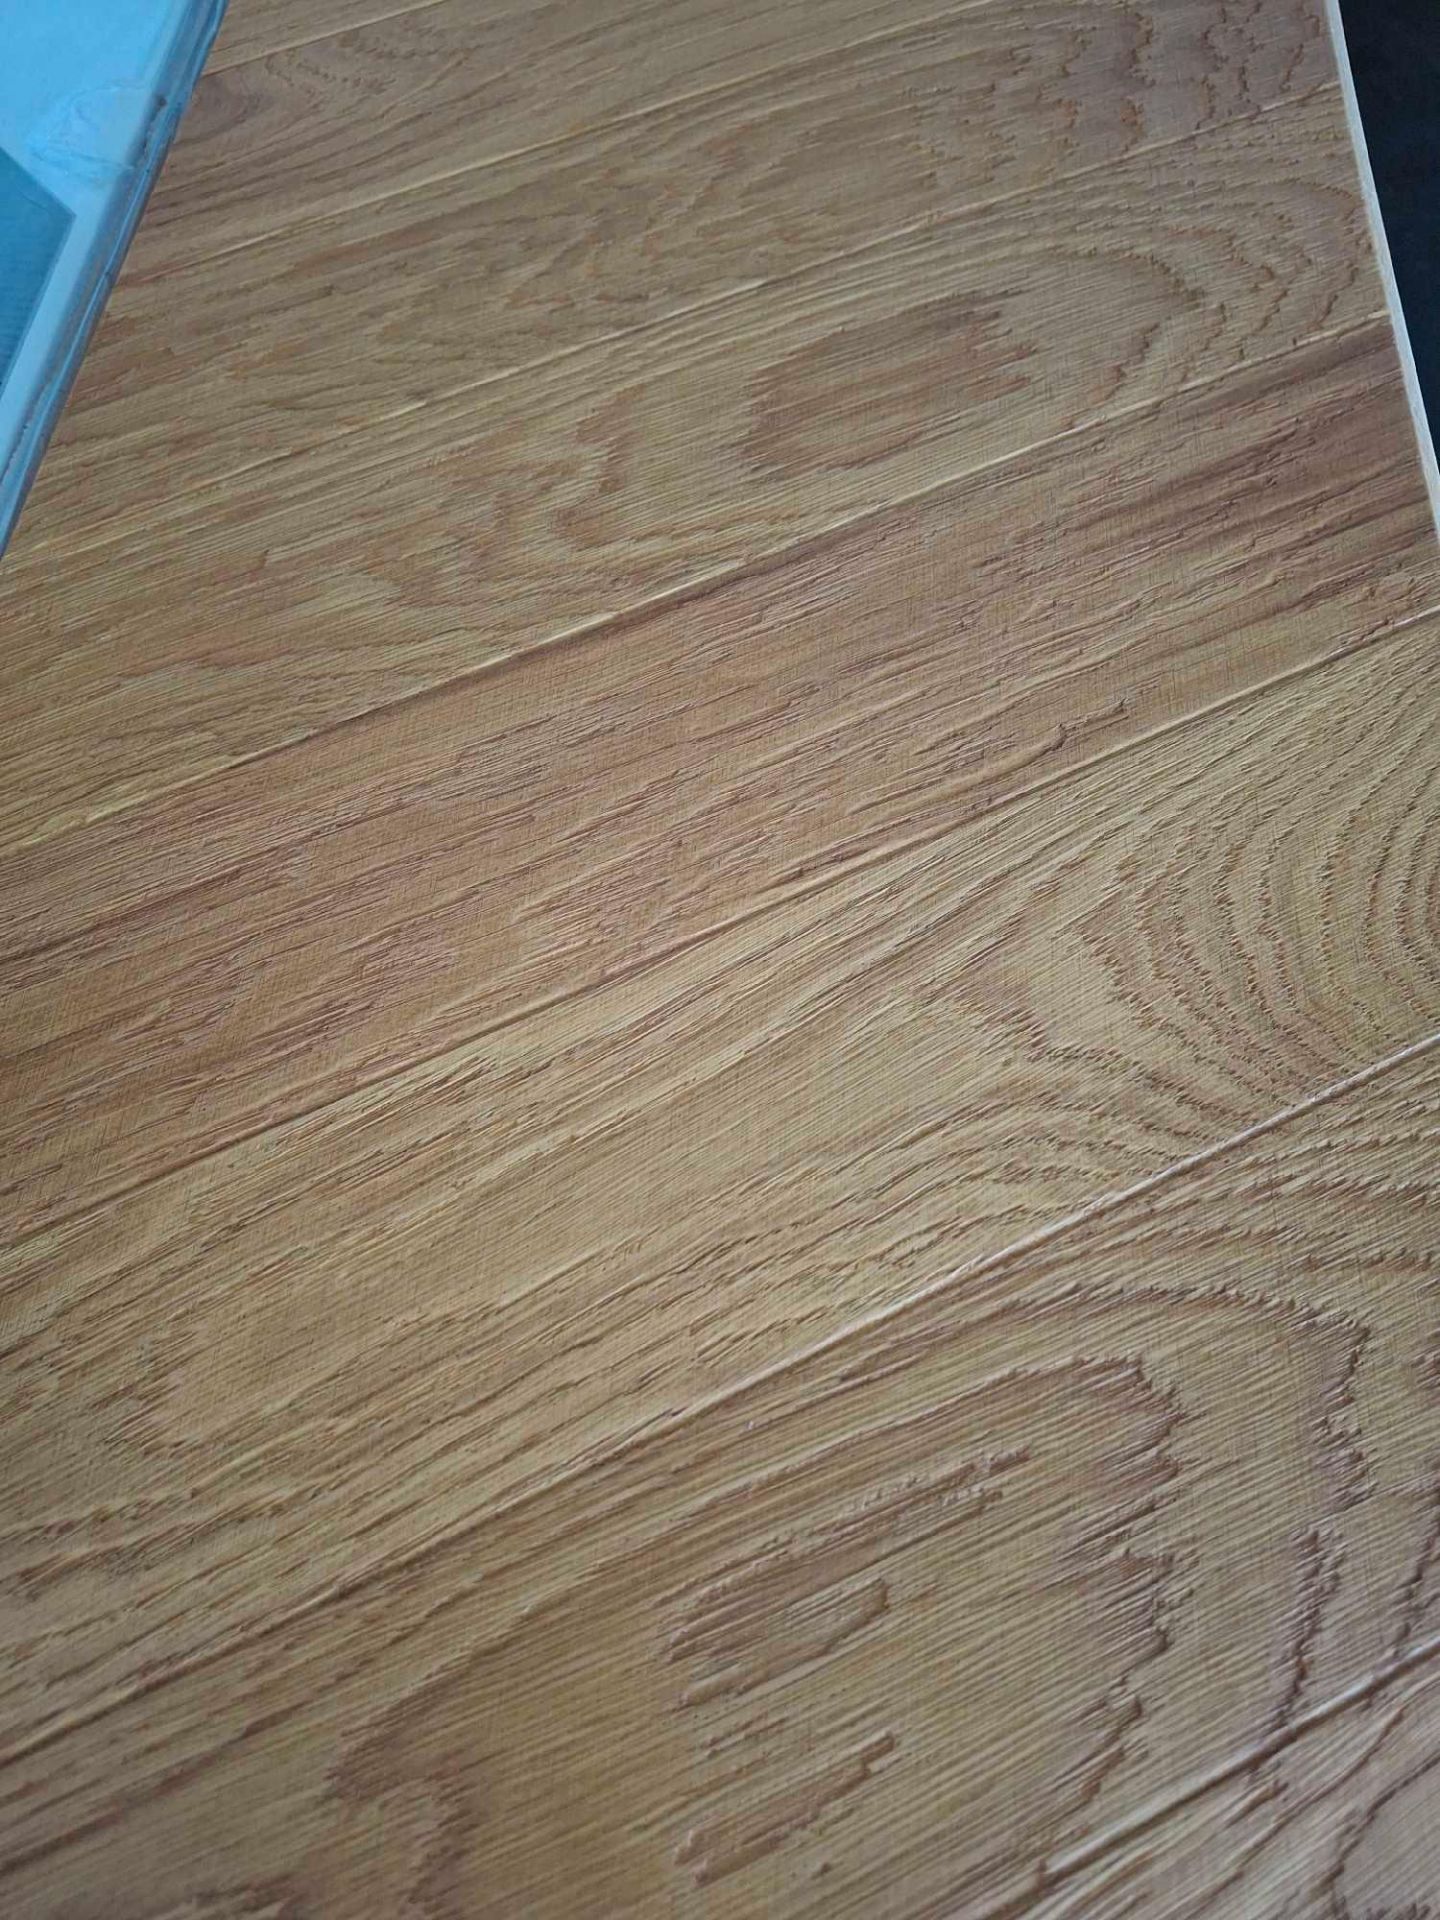 5 Packs of KÃ¤hrs Wood Flooring Chevron Light Brown Oiled 1848mm x 305mm x 15mm Per Plank 4 Per Pack